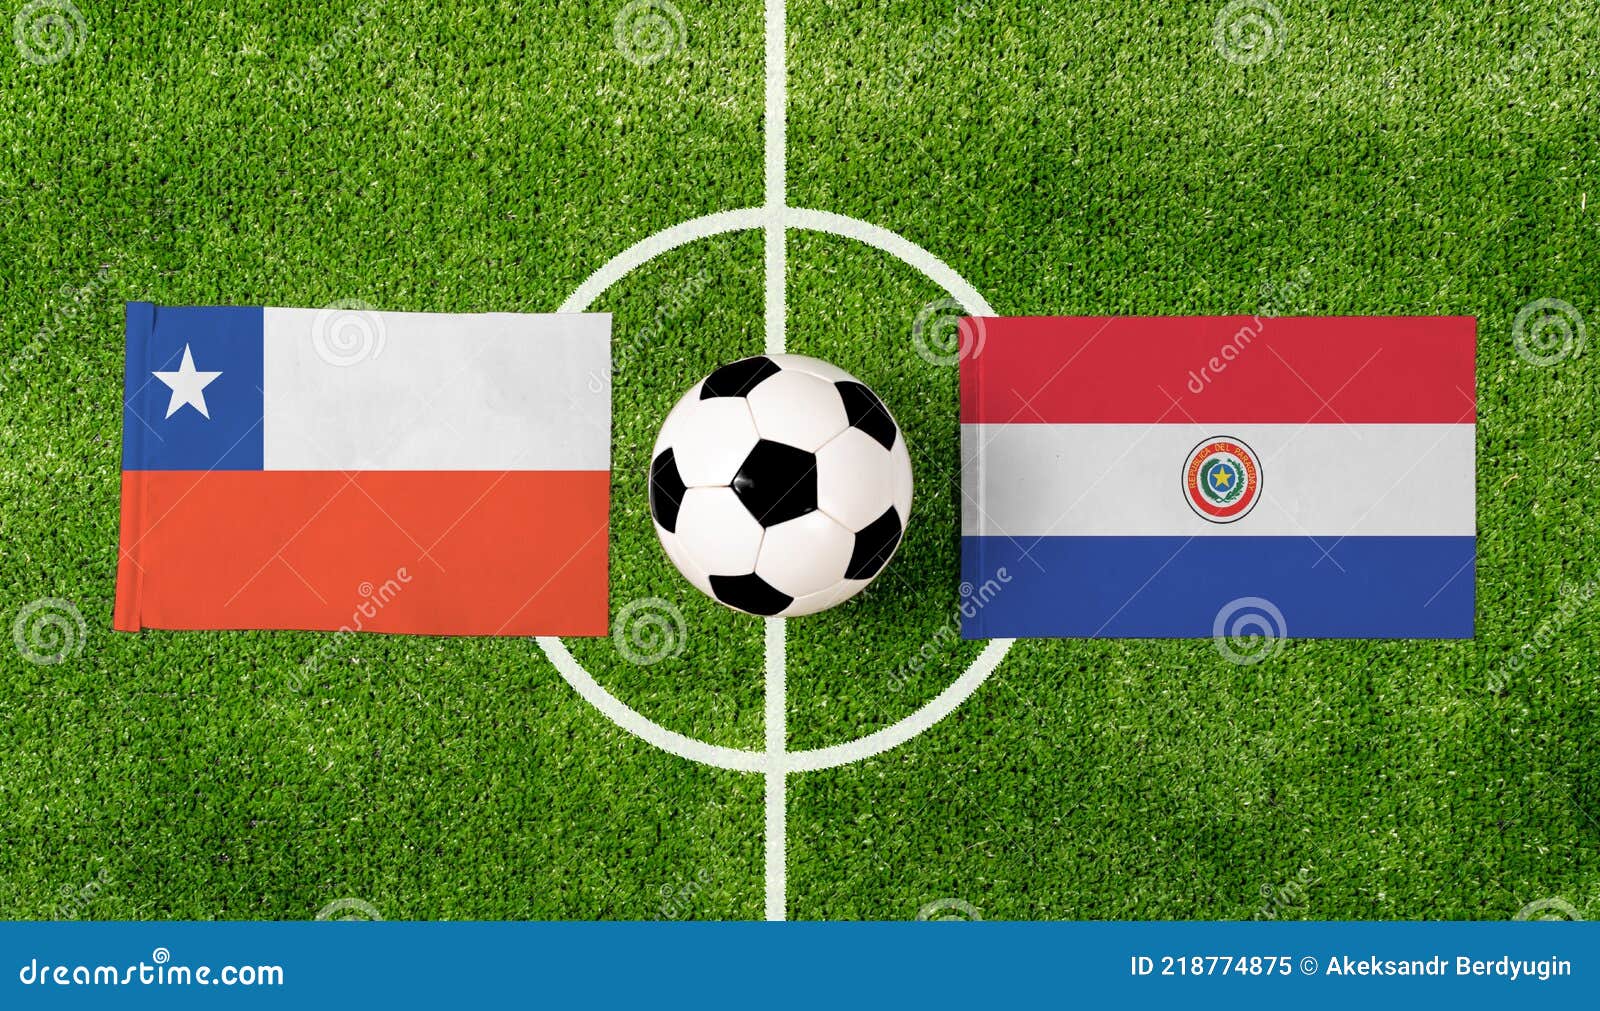 Chile vs paraguay